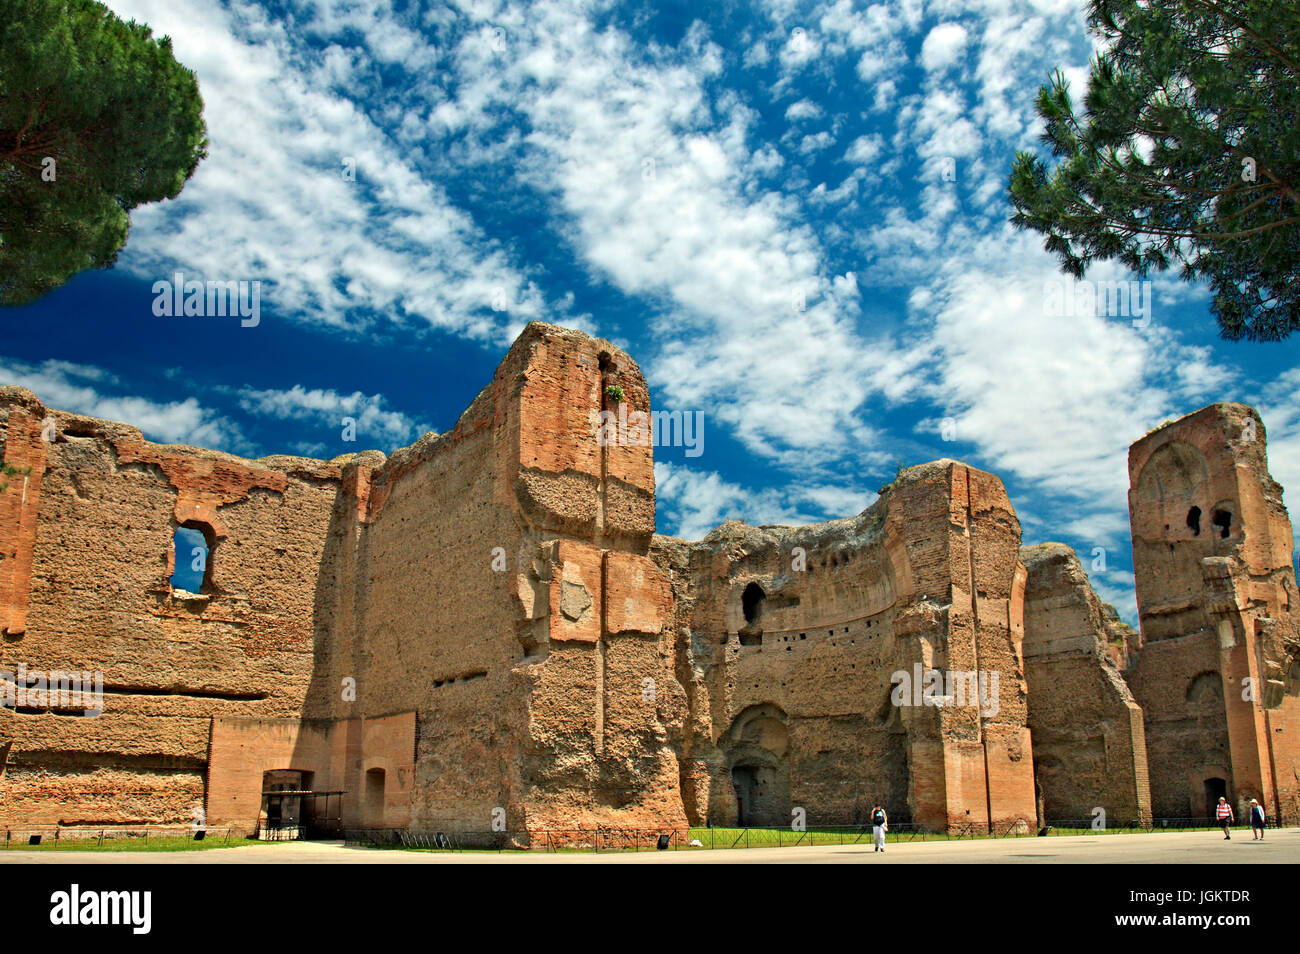 At the Baths of Caracalla (Terme di Caracalla - built between 212 - 216/217 AD), Rome, Italy. Stock Photo